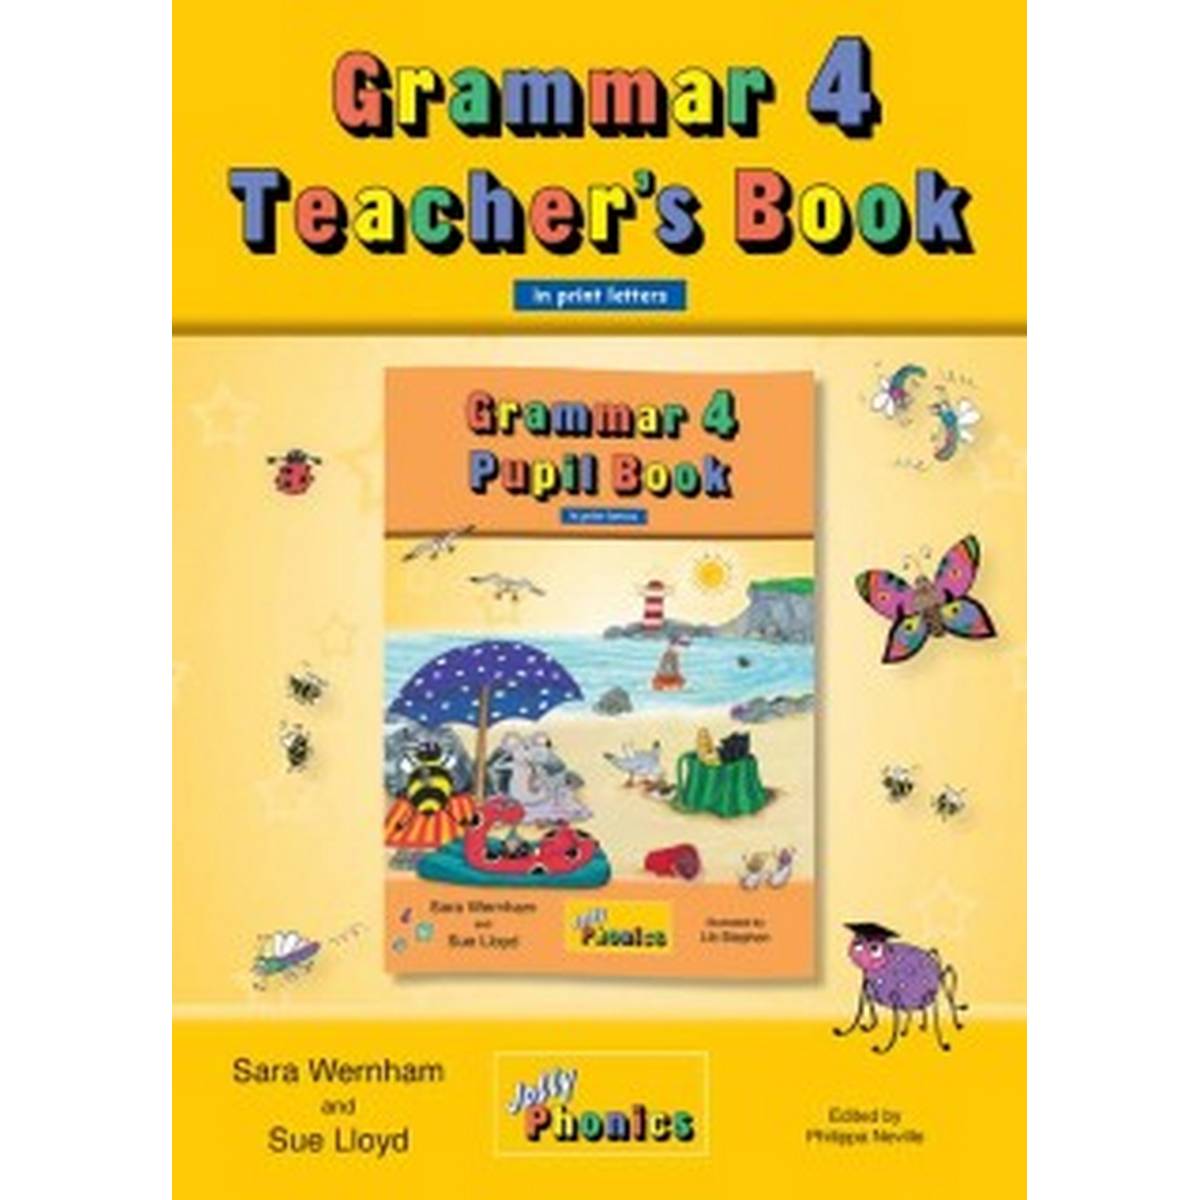 Jolly Grammar 4 Teacher’s Book (In Print Letters)